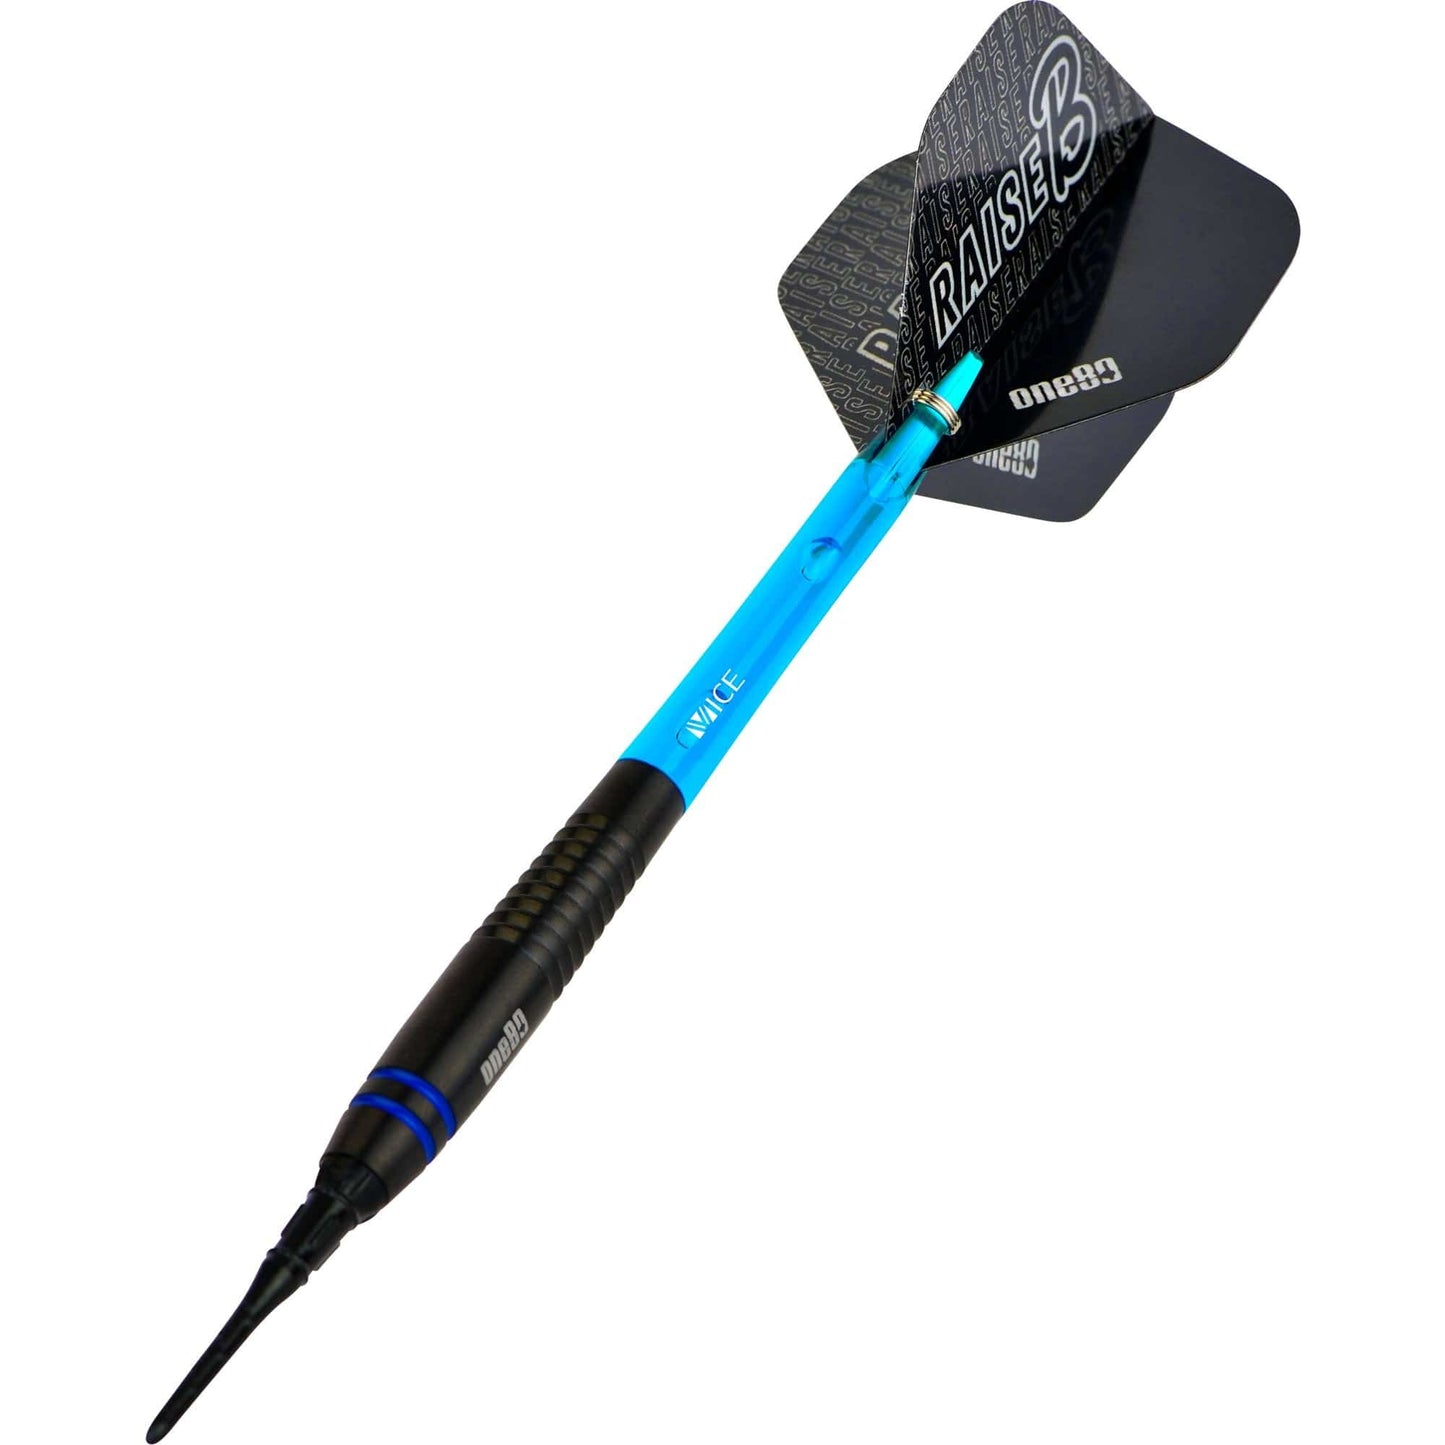 One80 Raise B Darts - Soft Tip - Black - Blue Rings 17g